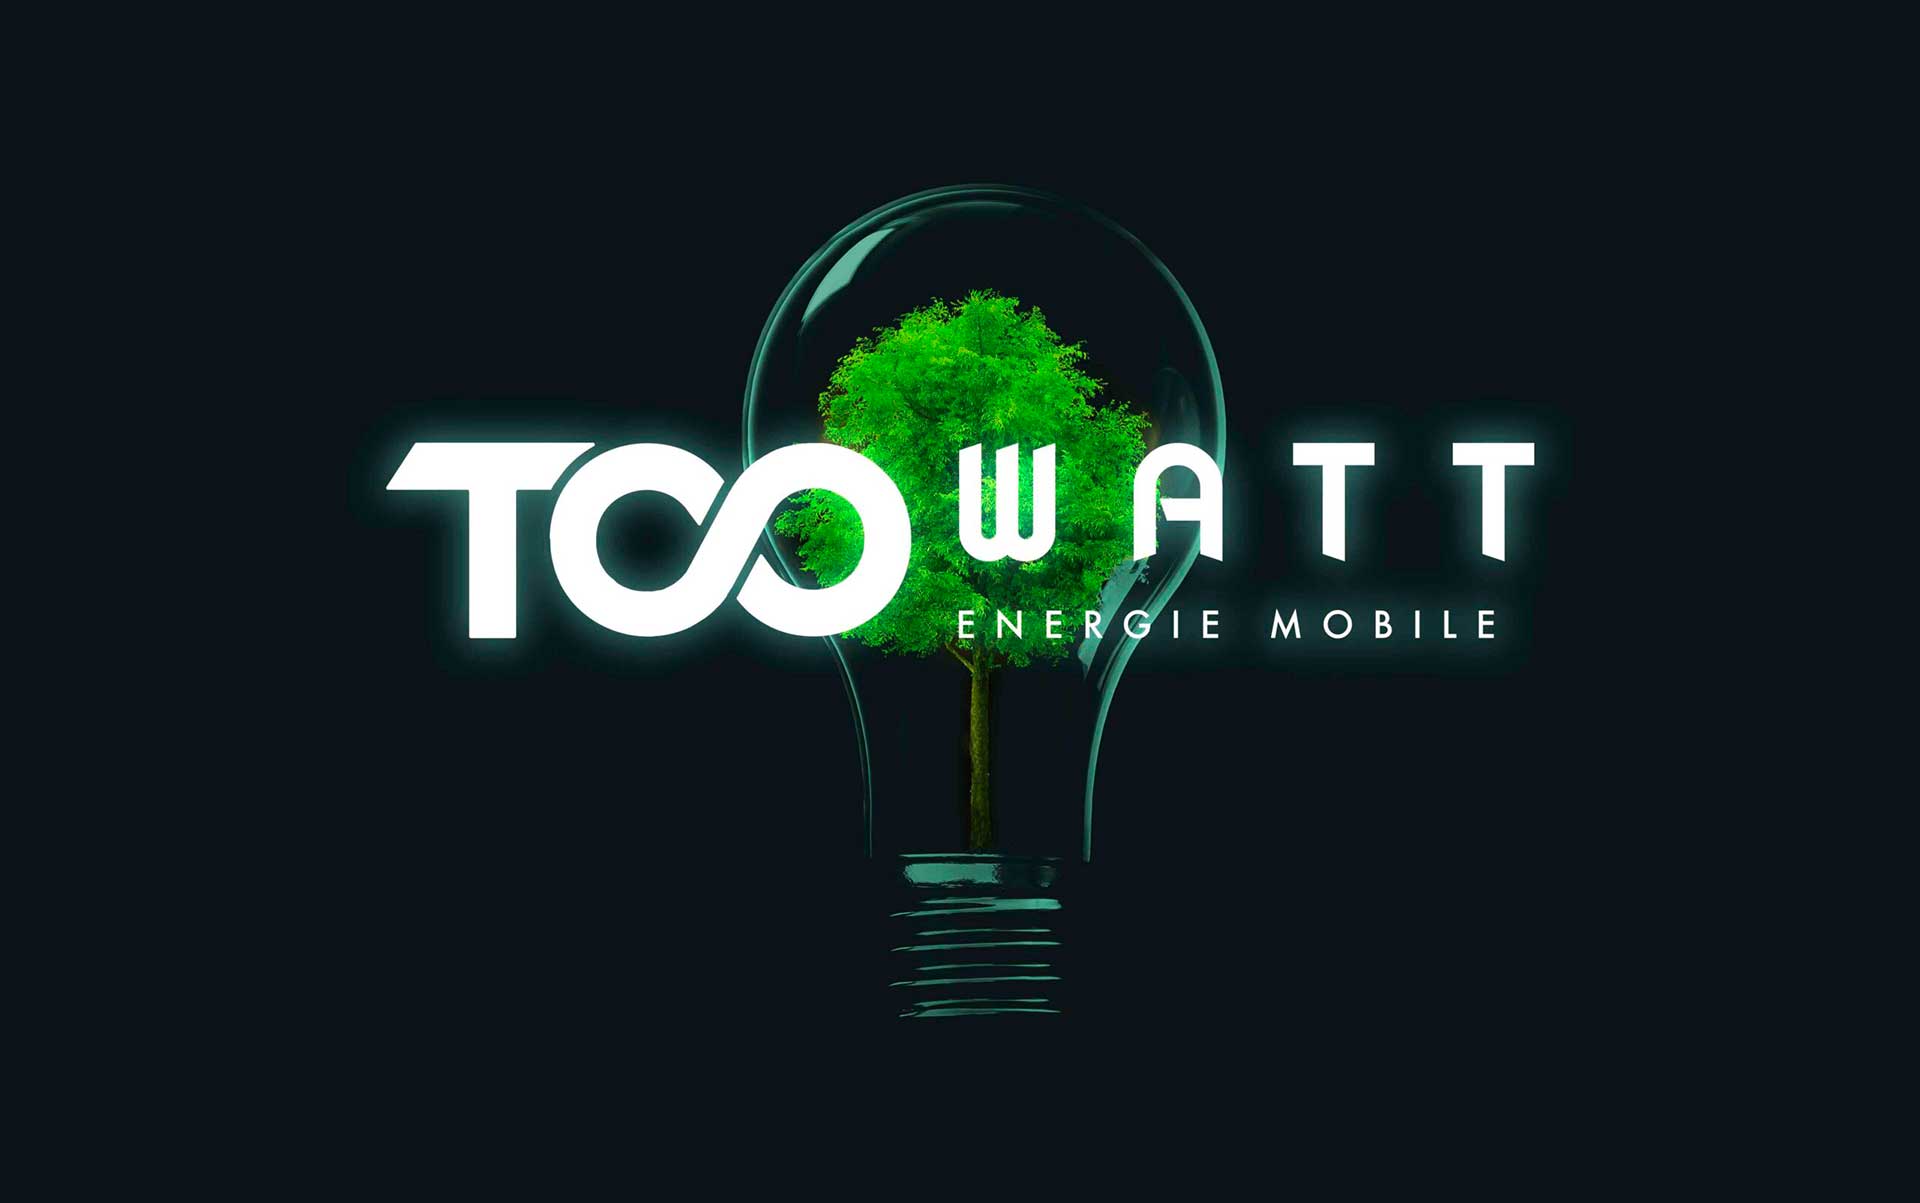 TOOWATT - Énergies Mobiles